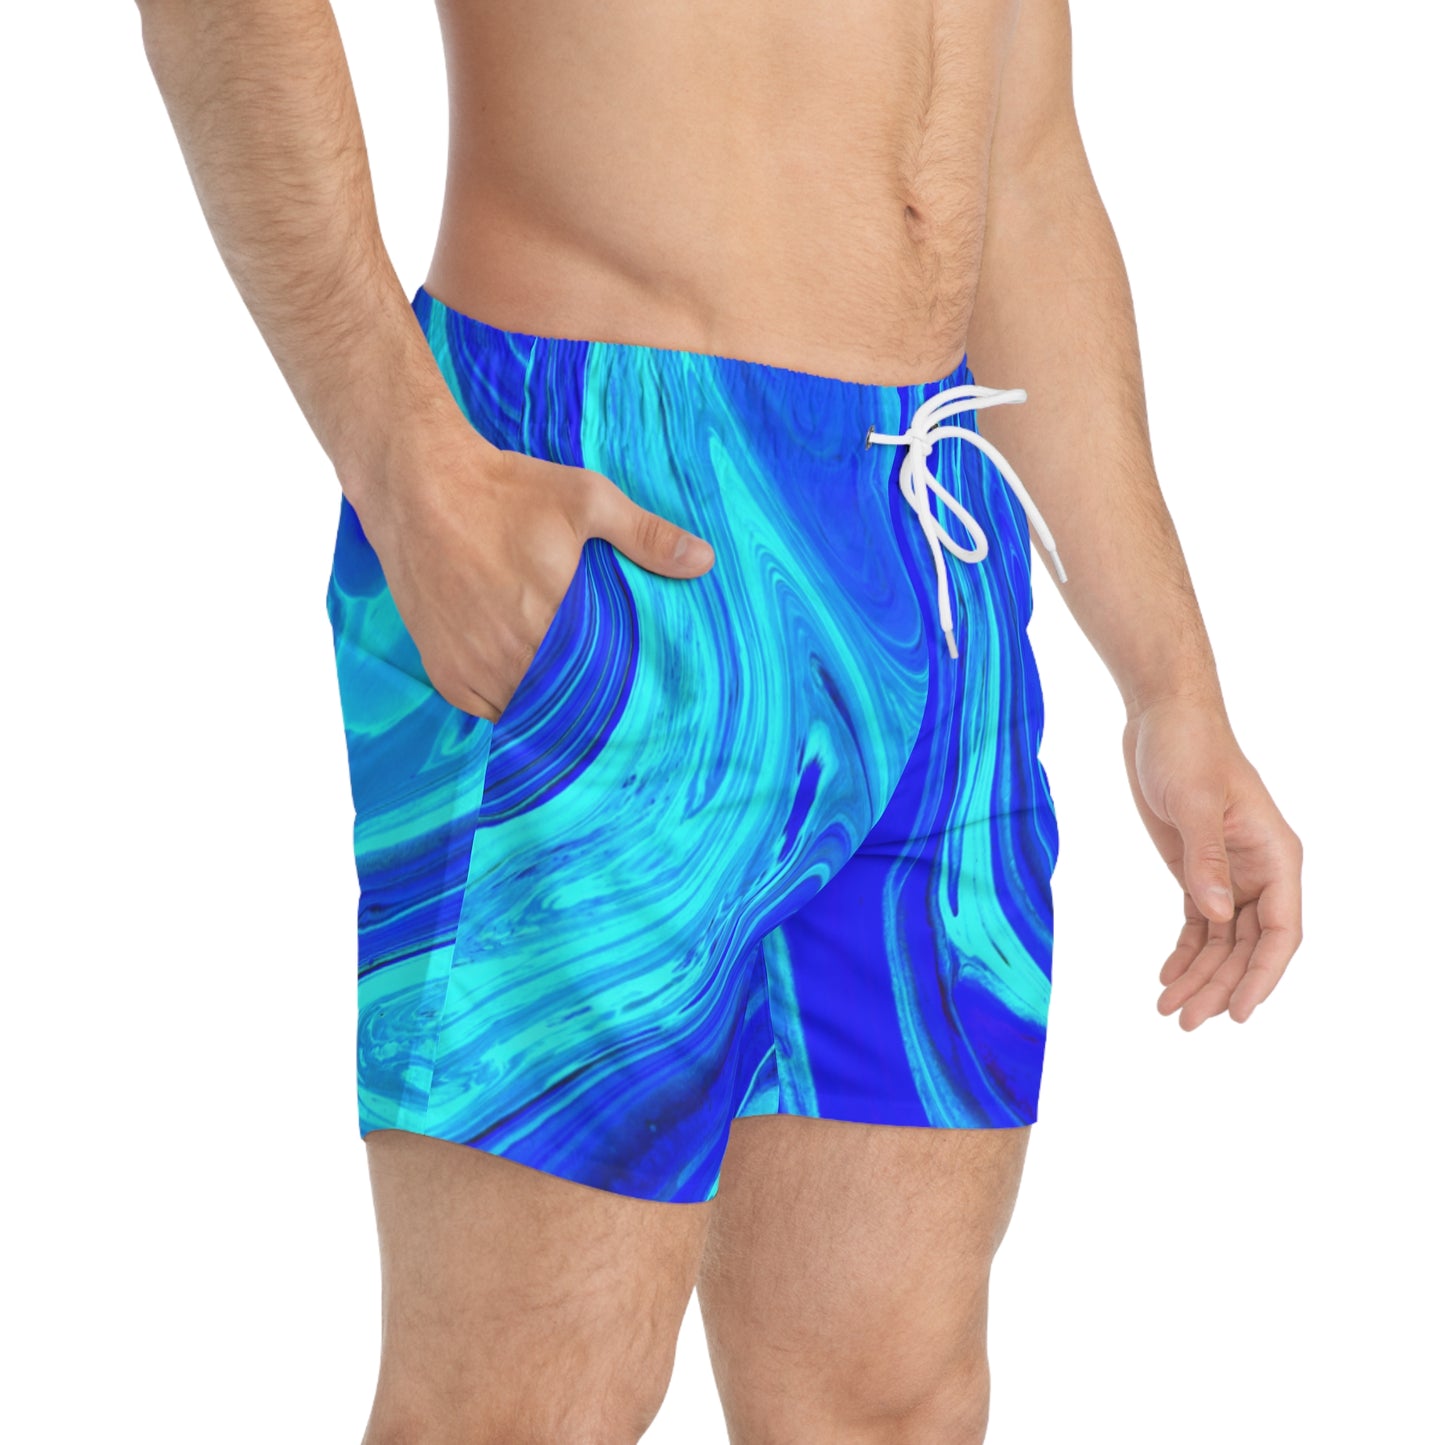 Aqua Chic Splash-Ready Swim Trunks